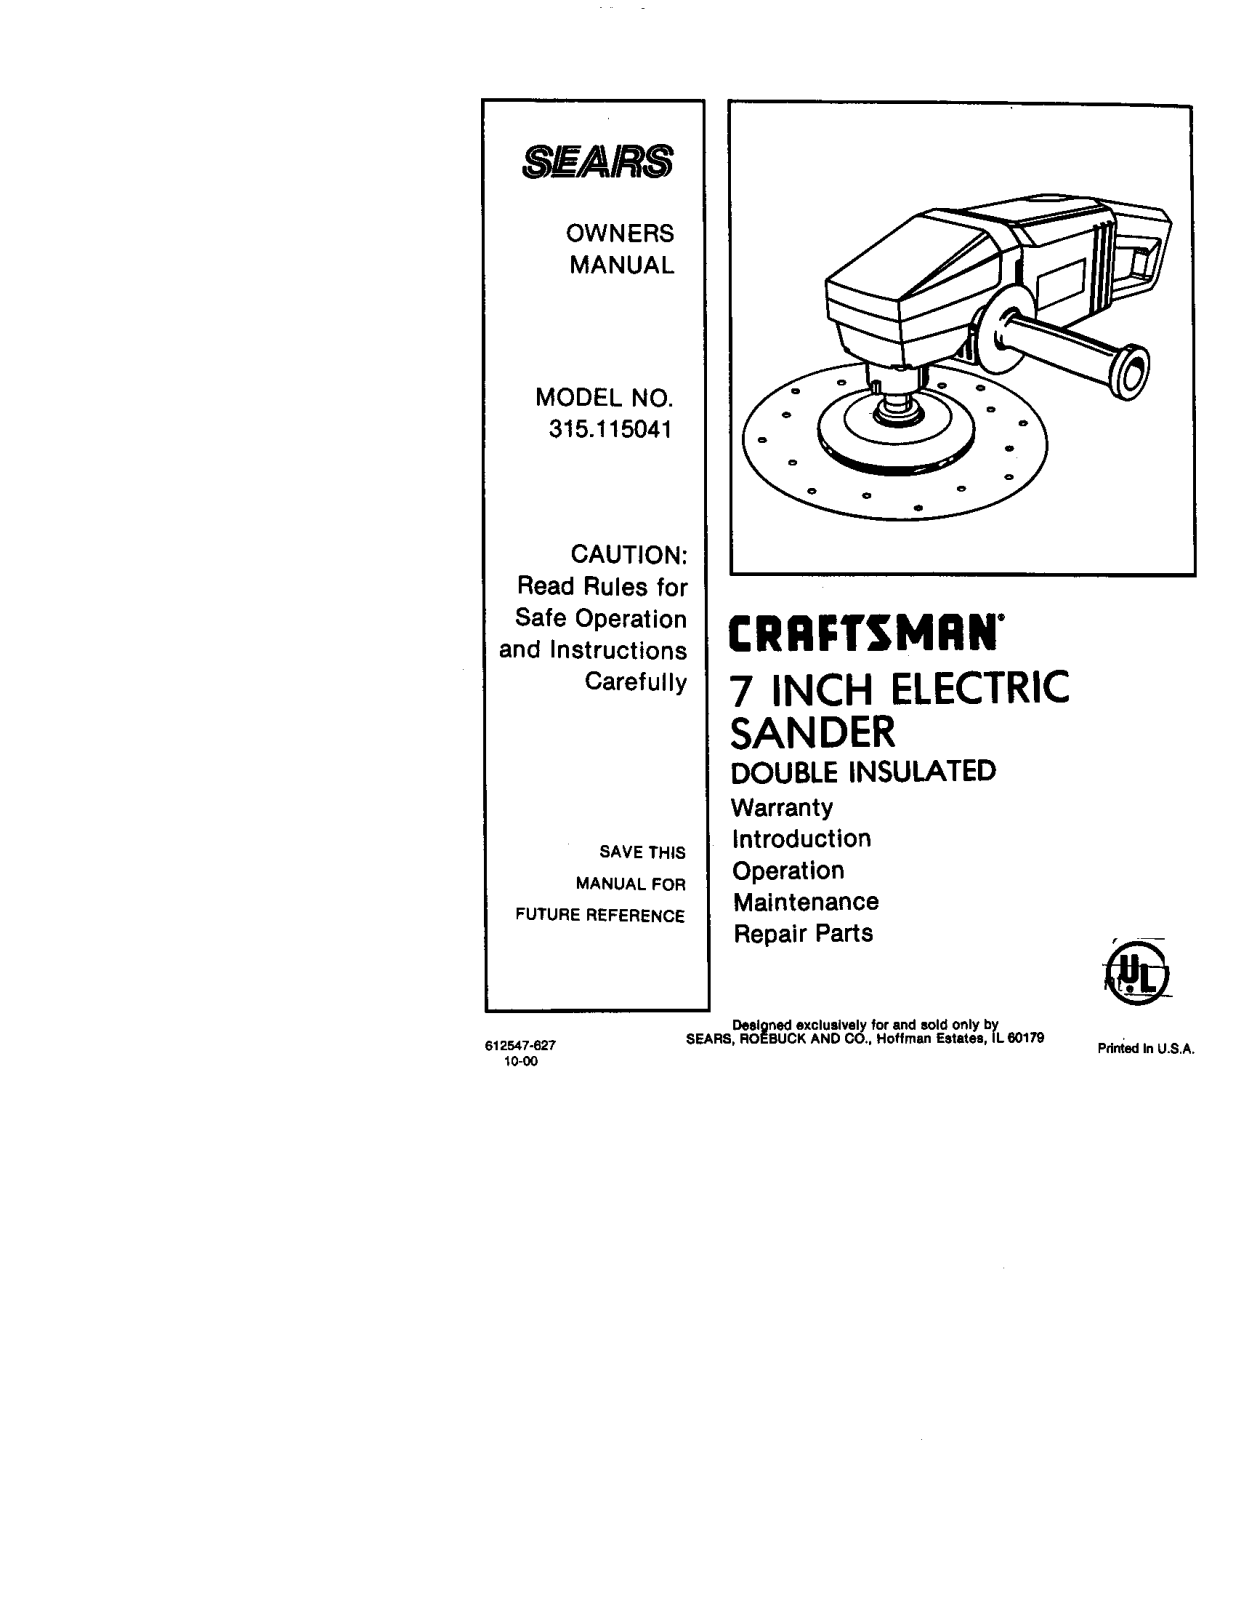 Craftsman 315115041 Owner’s Manual